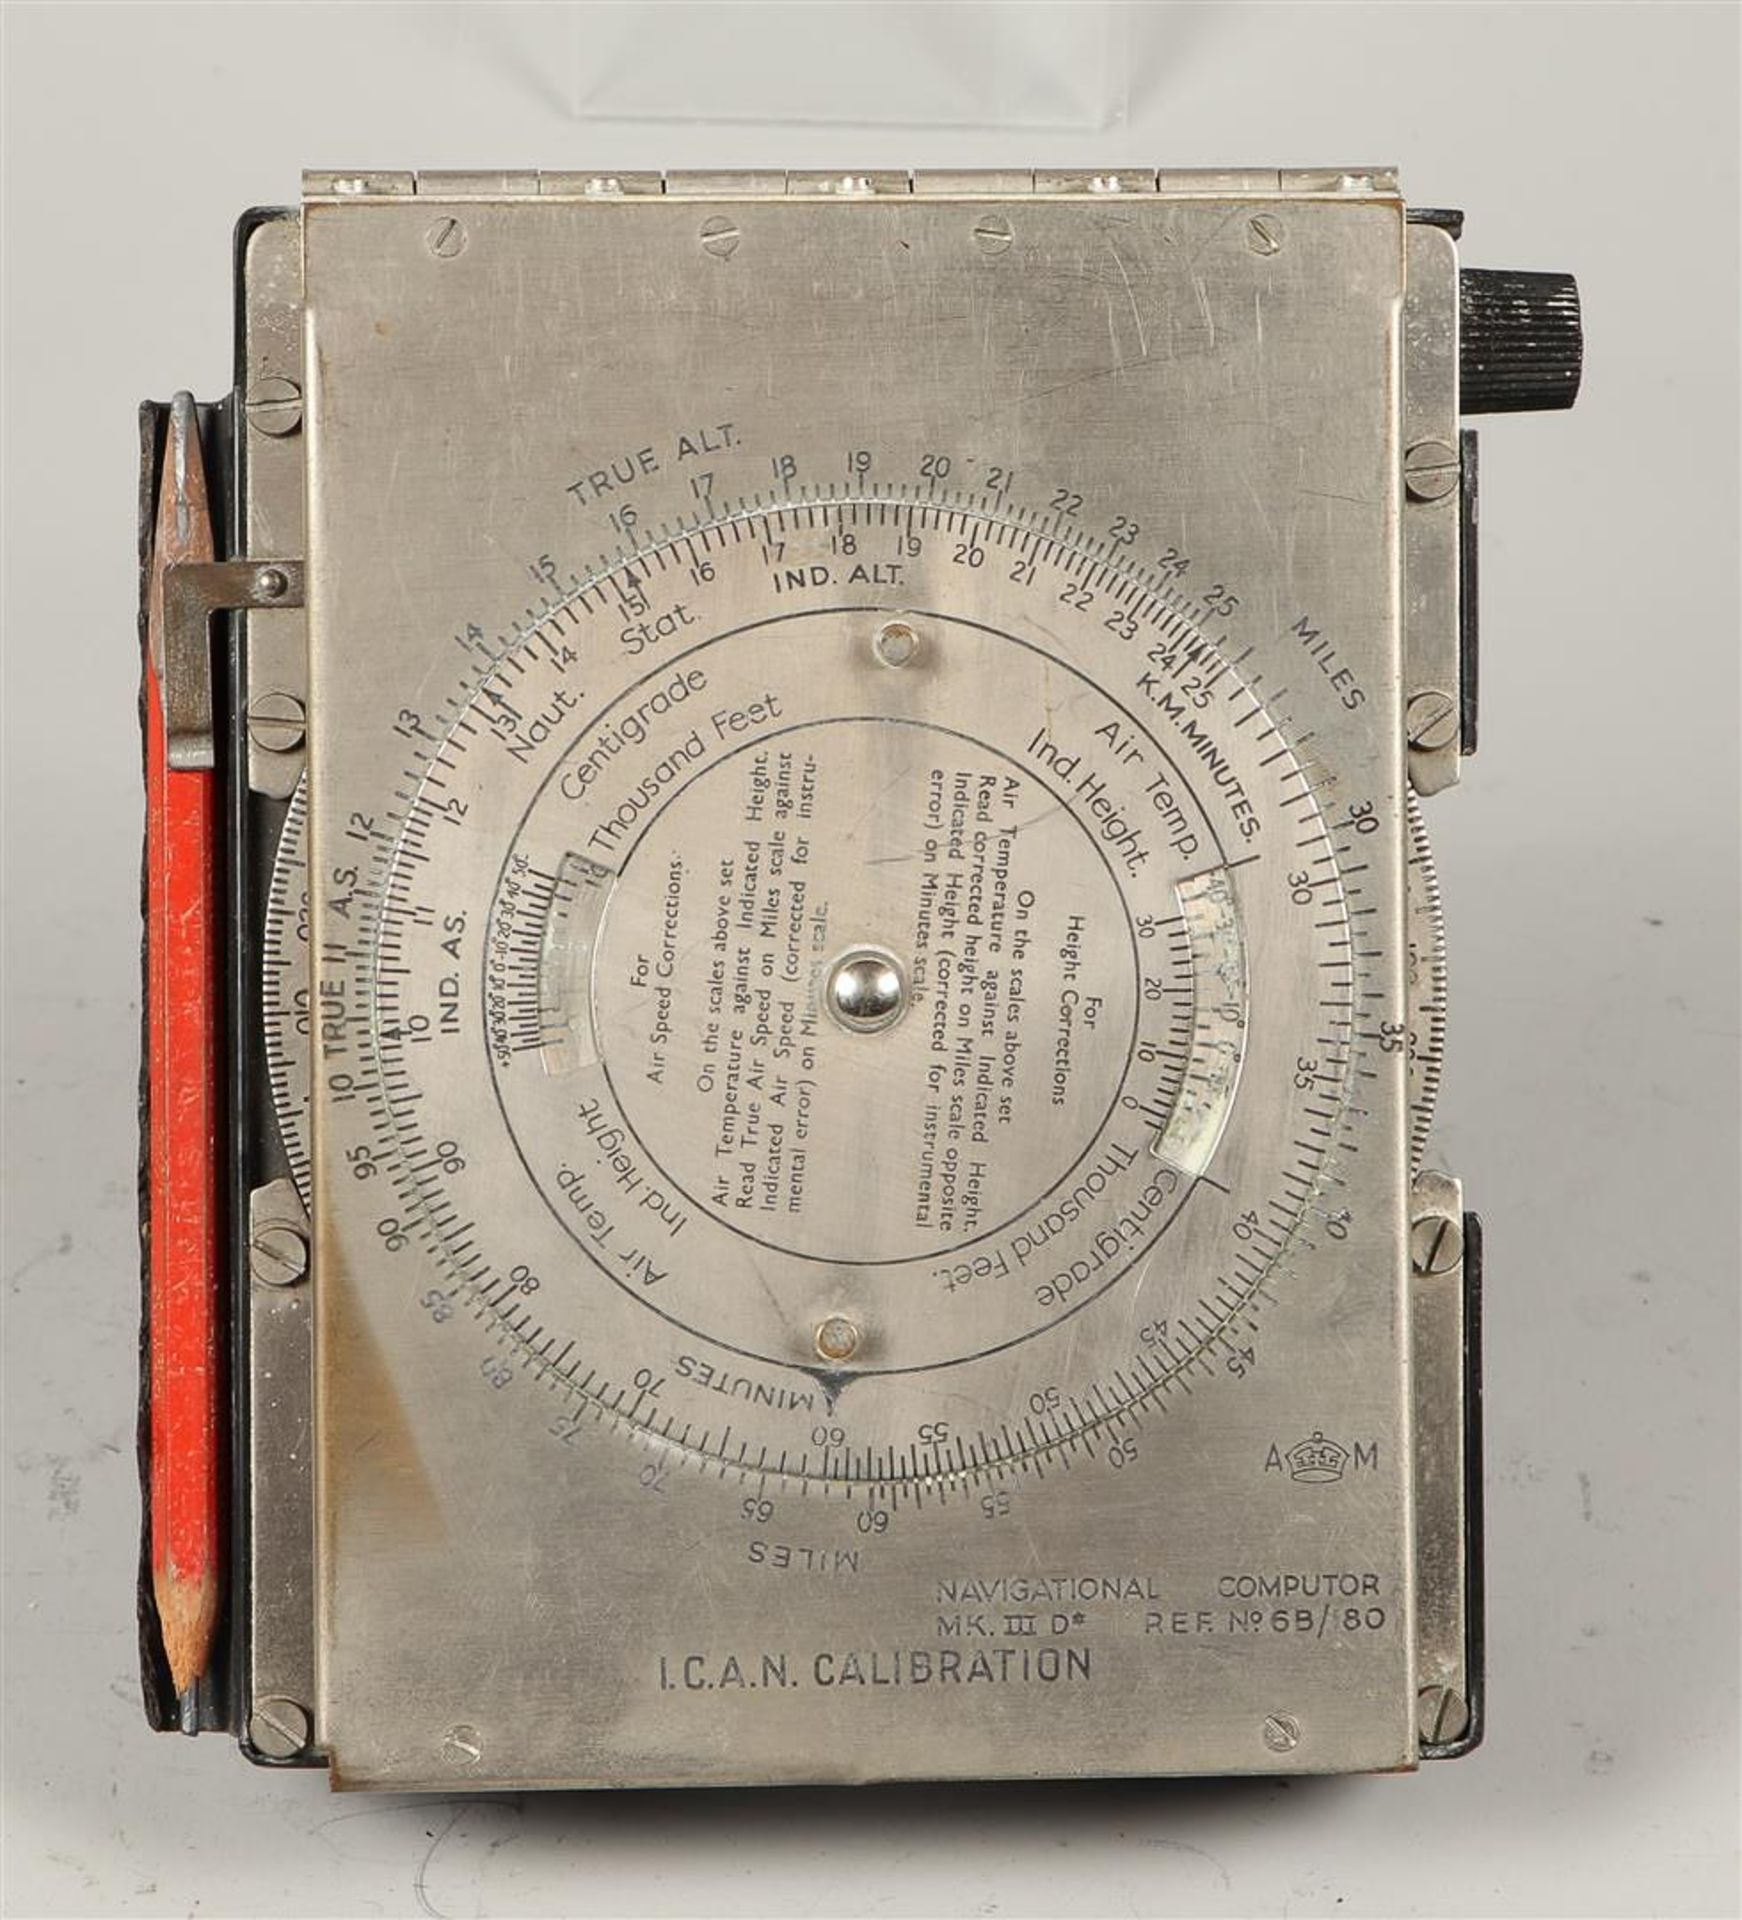 An I.CA.N. Calibration Navigational Computer MK. IIID* Ref. no. 6B/180. England, mid 20th century. - Image 3 of 3